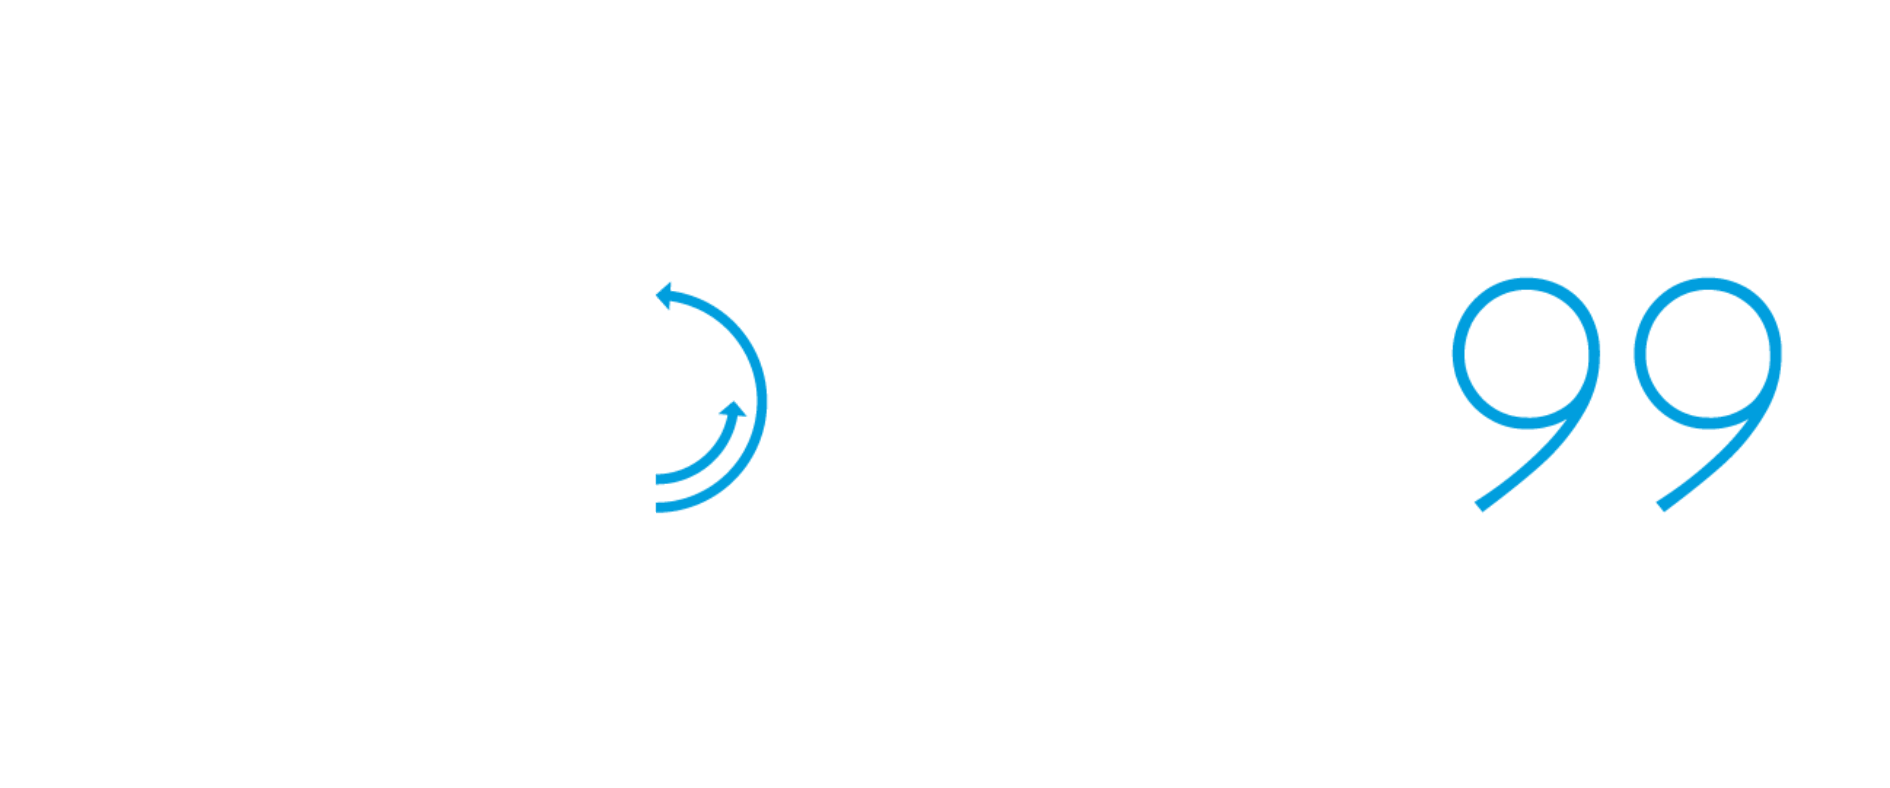 https://centraloregonaesthetics.com/wp-content/uploads/2023/02/Growth99-logo-.png